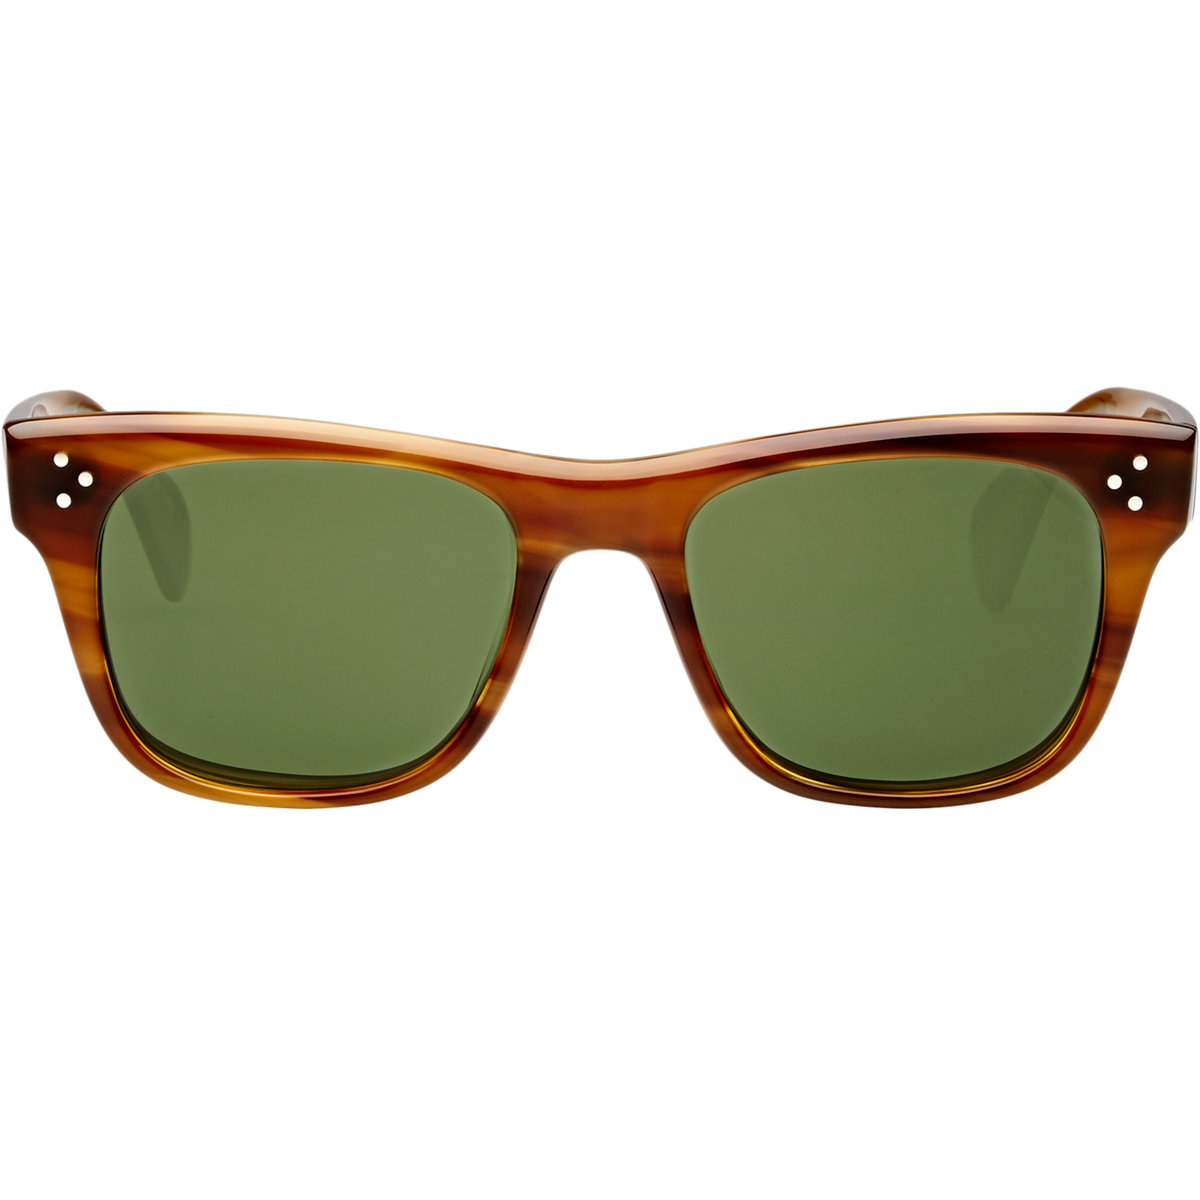 Lyst - Oliver Peoples Jack Huston Sunglasses in Brown for Men